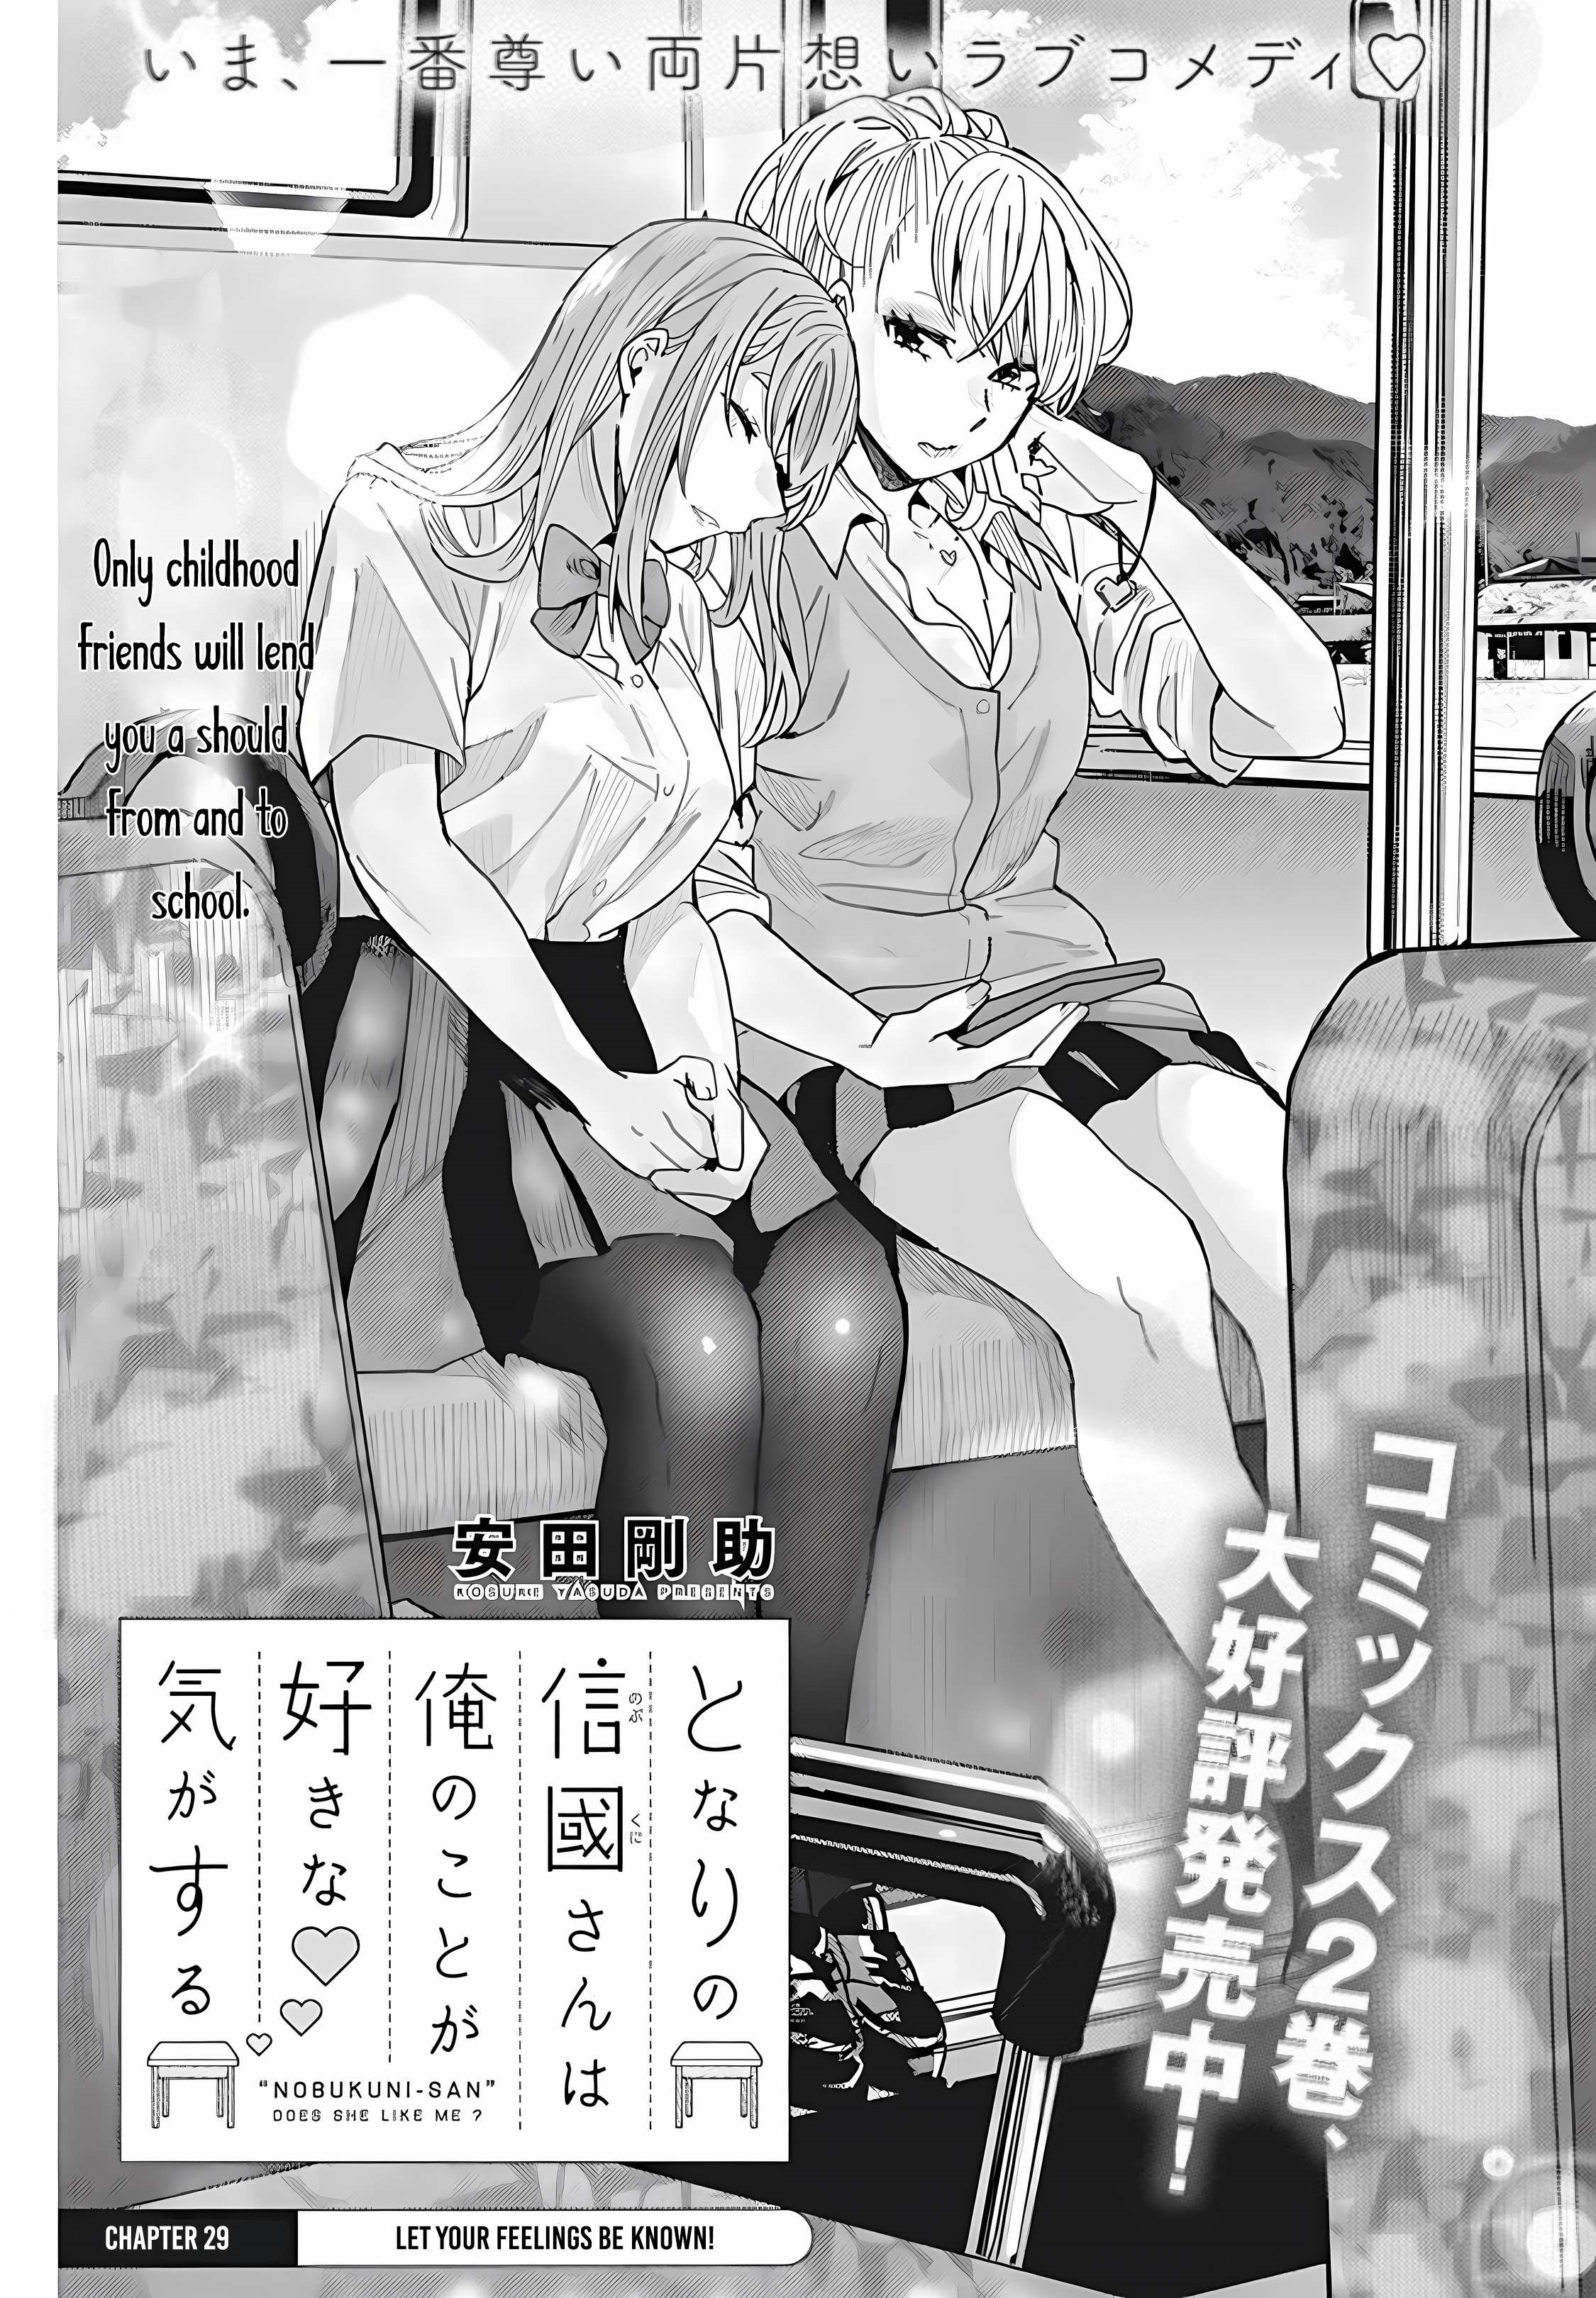 “Nobukuni-san” Does She Like Me? Chapter 29 - Page 1